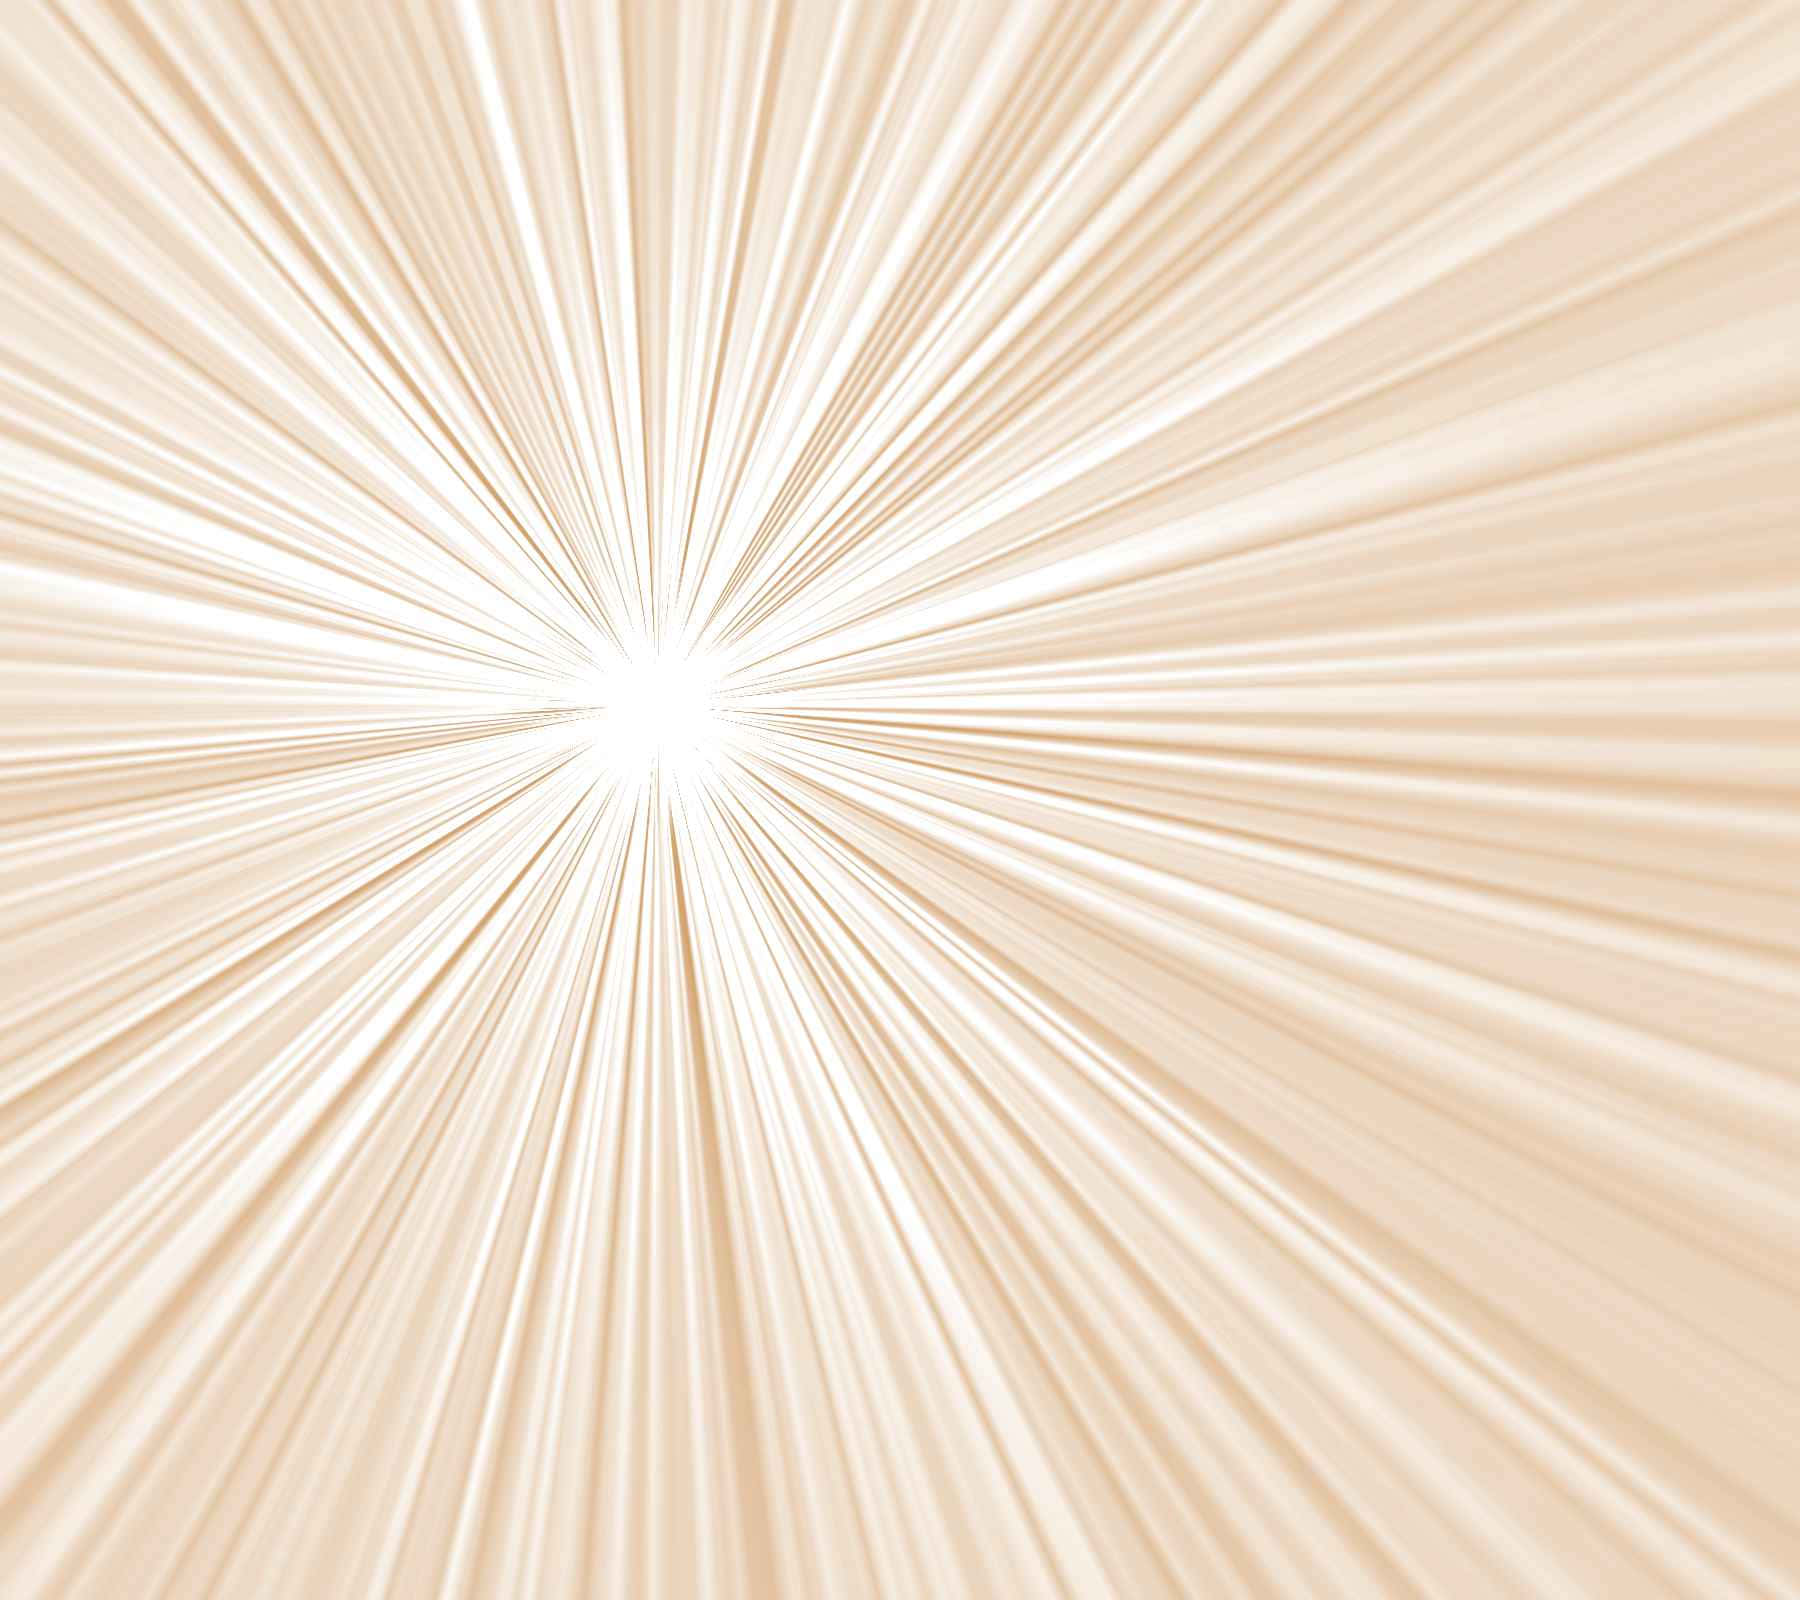 A Beige Sunburst Background With A Light Beam